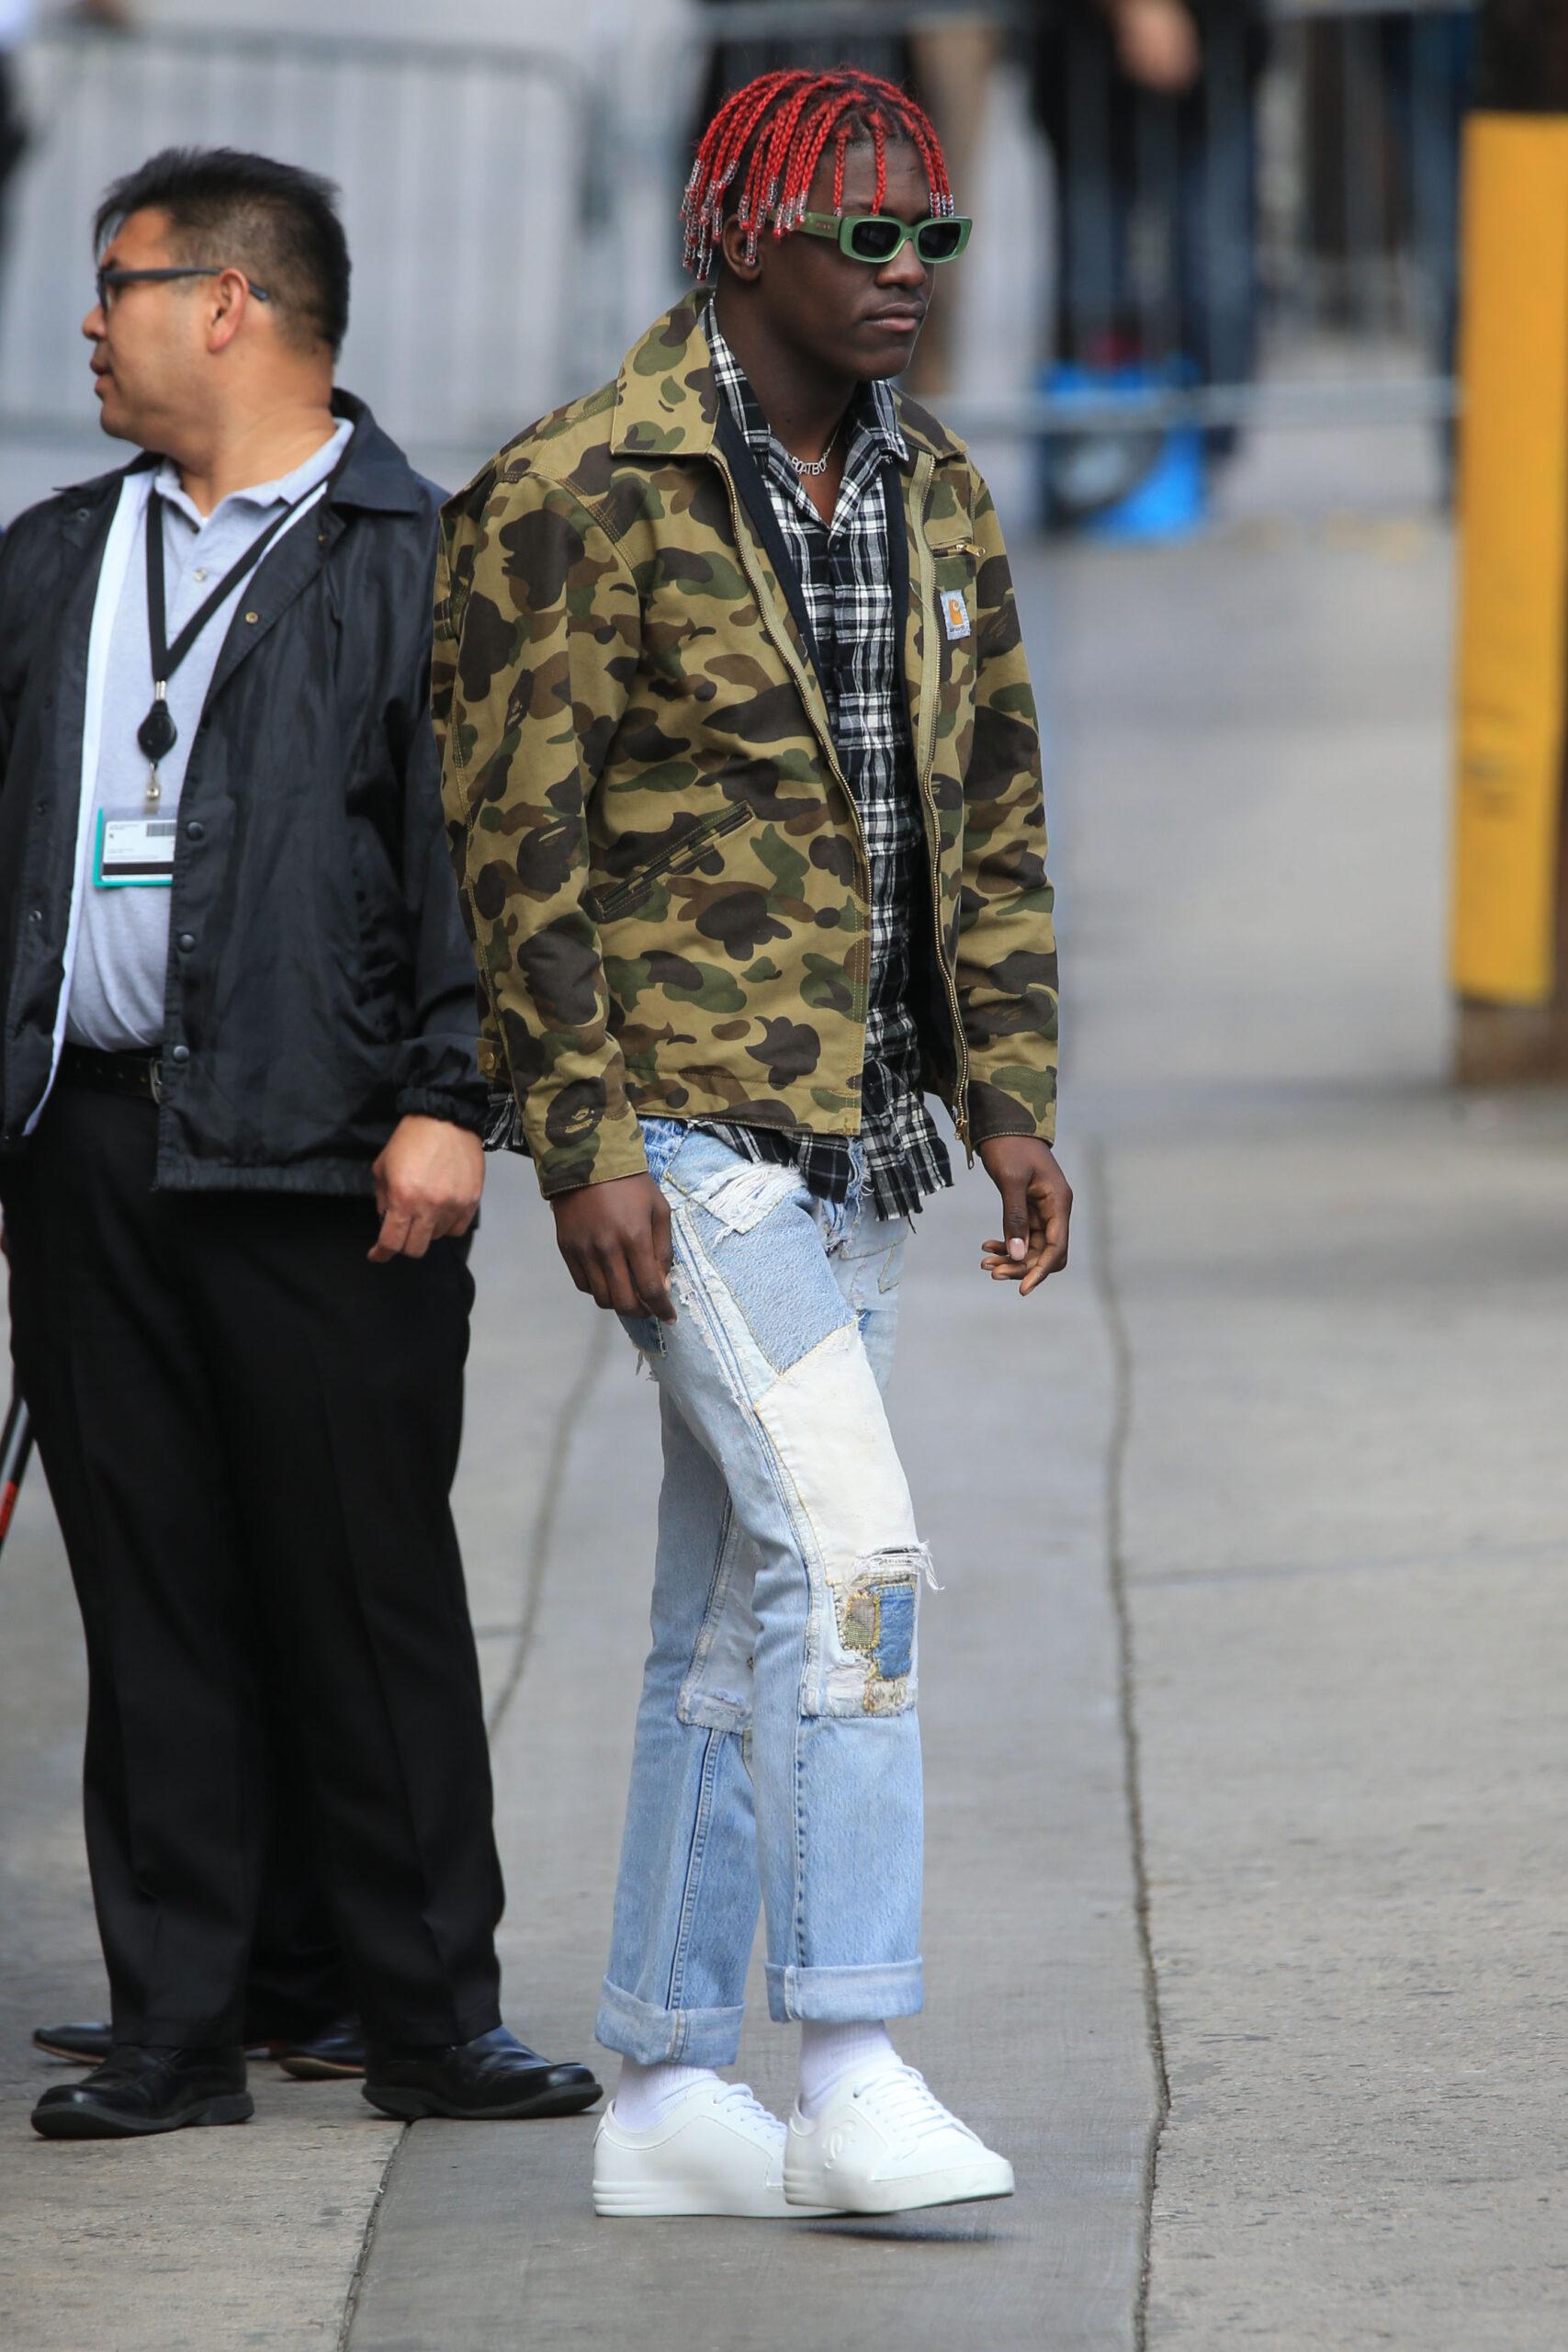 Rapper Lil Yachty's Alleged Victim Wants $12 MILLION For Concert Assault